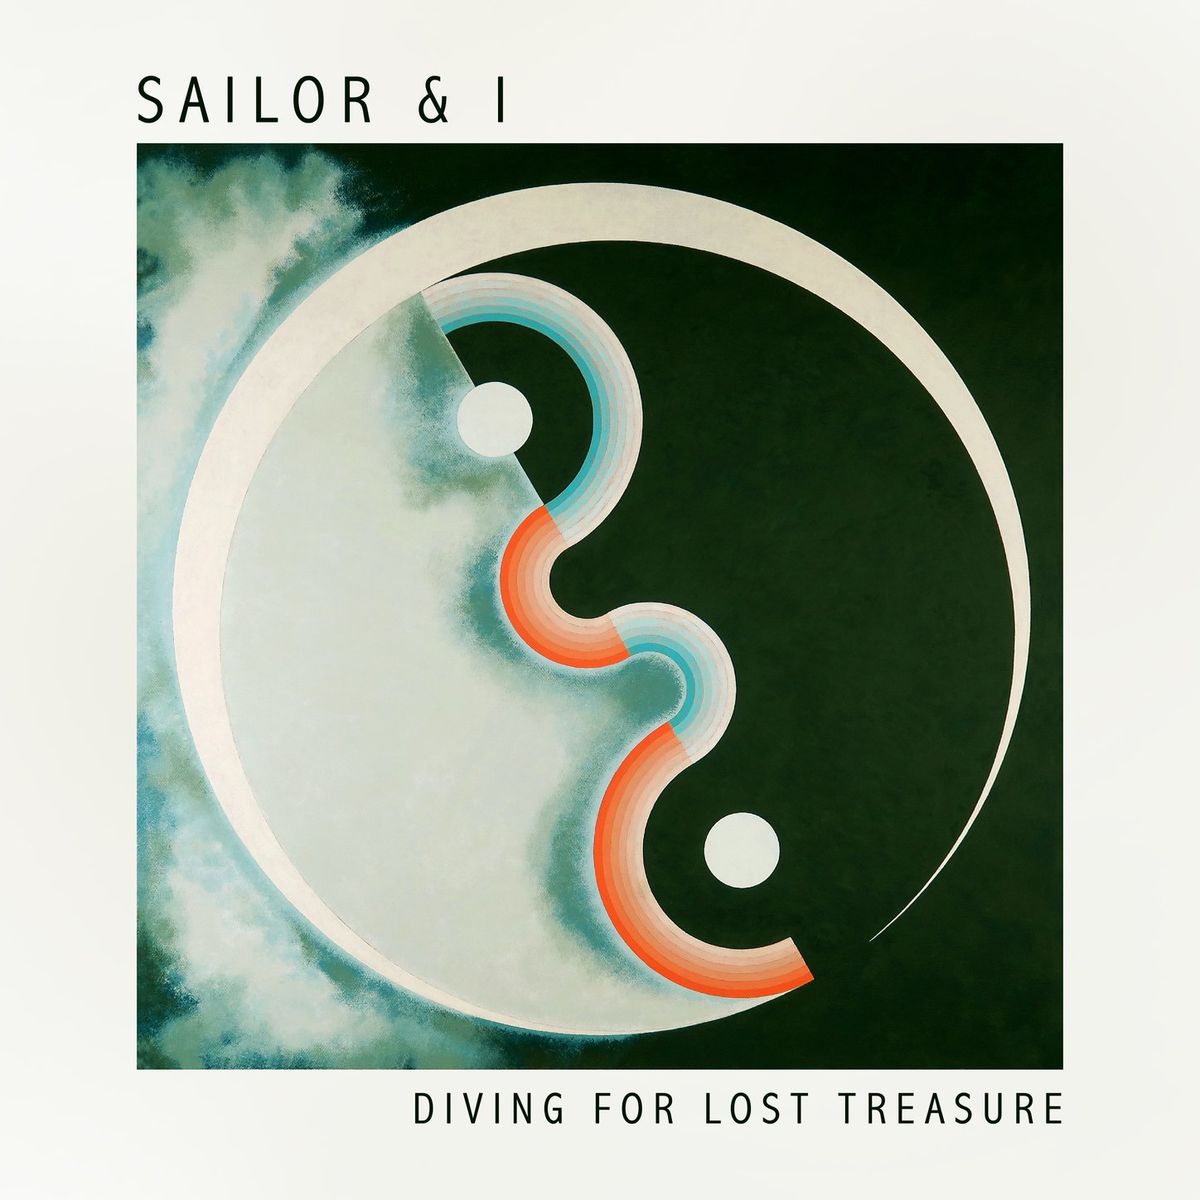 Sailor & I – Diving for Lost Treasure